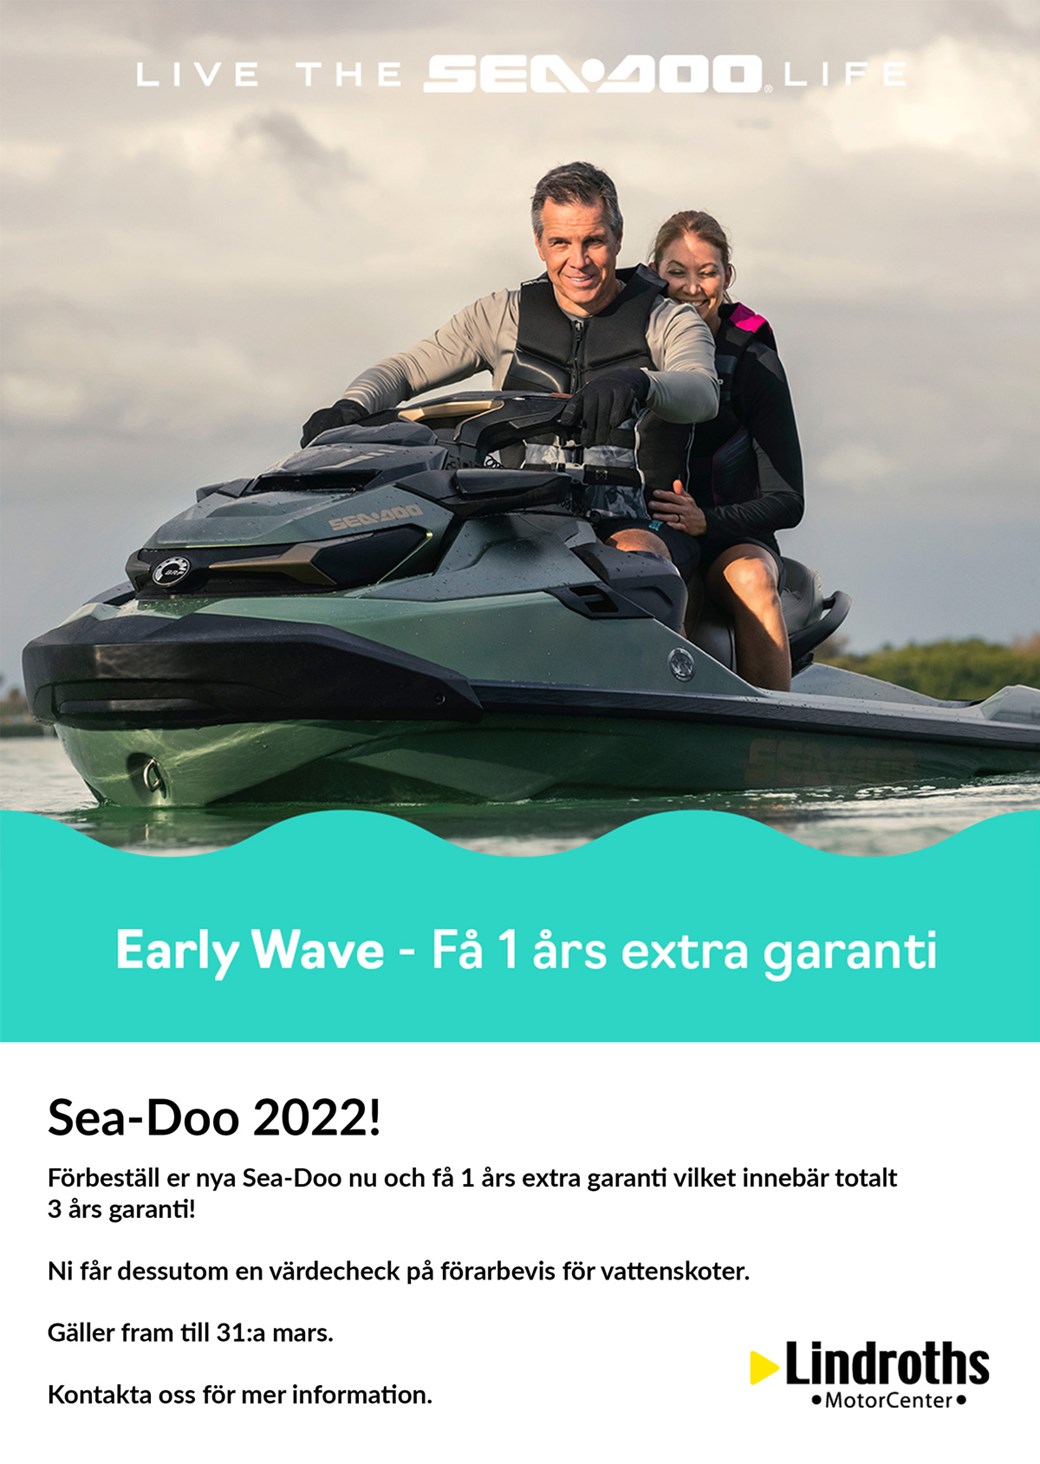 Förhandsboka Sea-Doo 2022!